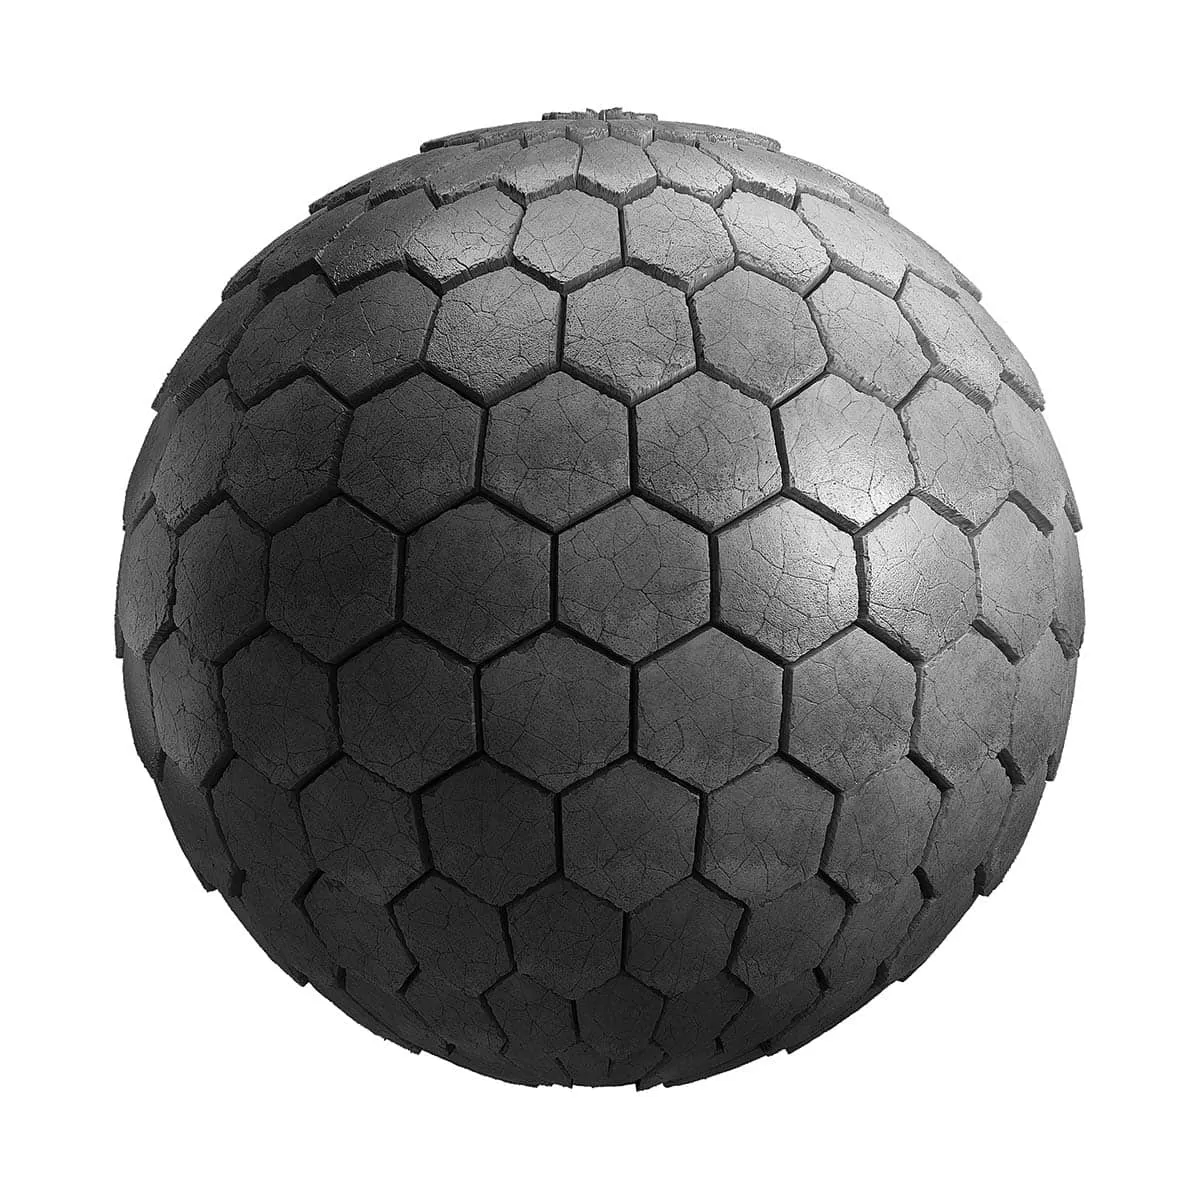 PBR Textures Volume 21 – Walls – 4K – 8K – hexagonal_concrete_tiles_21_46